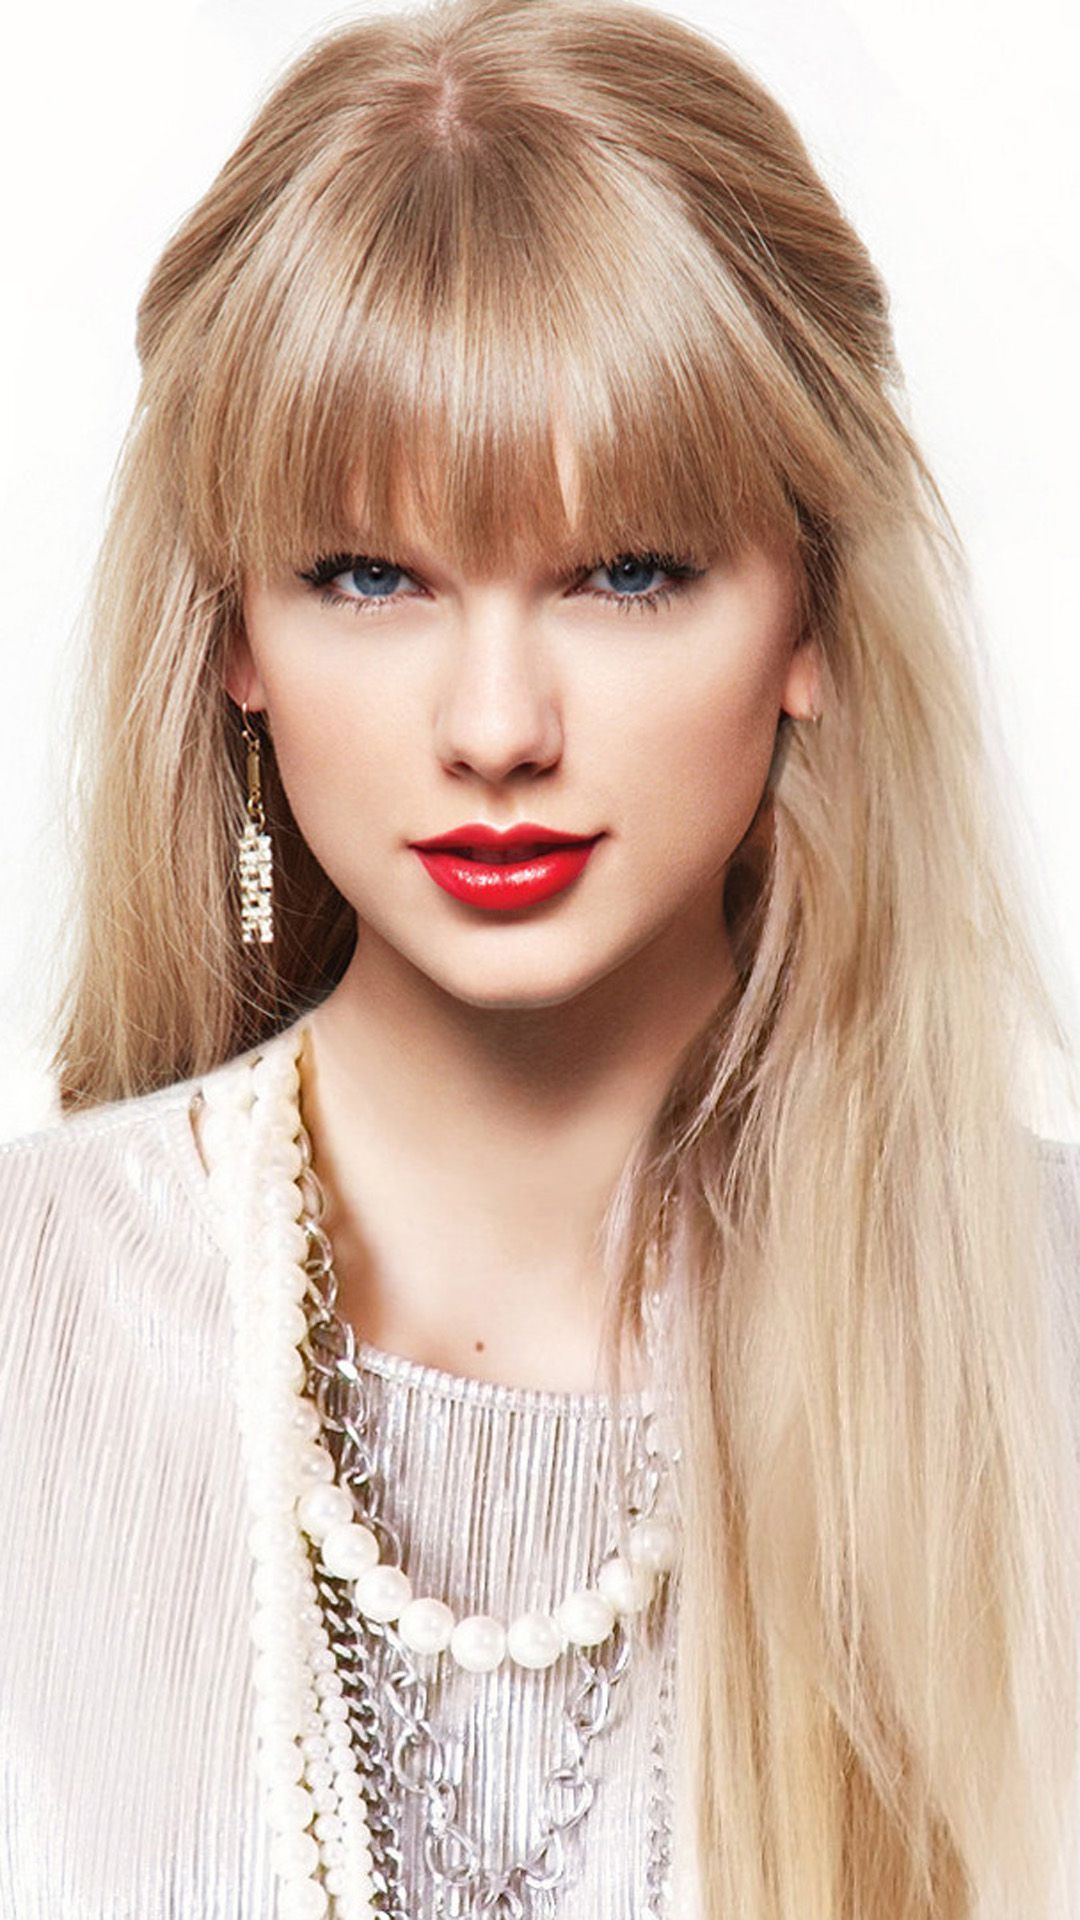 Taylor Swift HD Wallpaper. Taylor